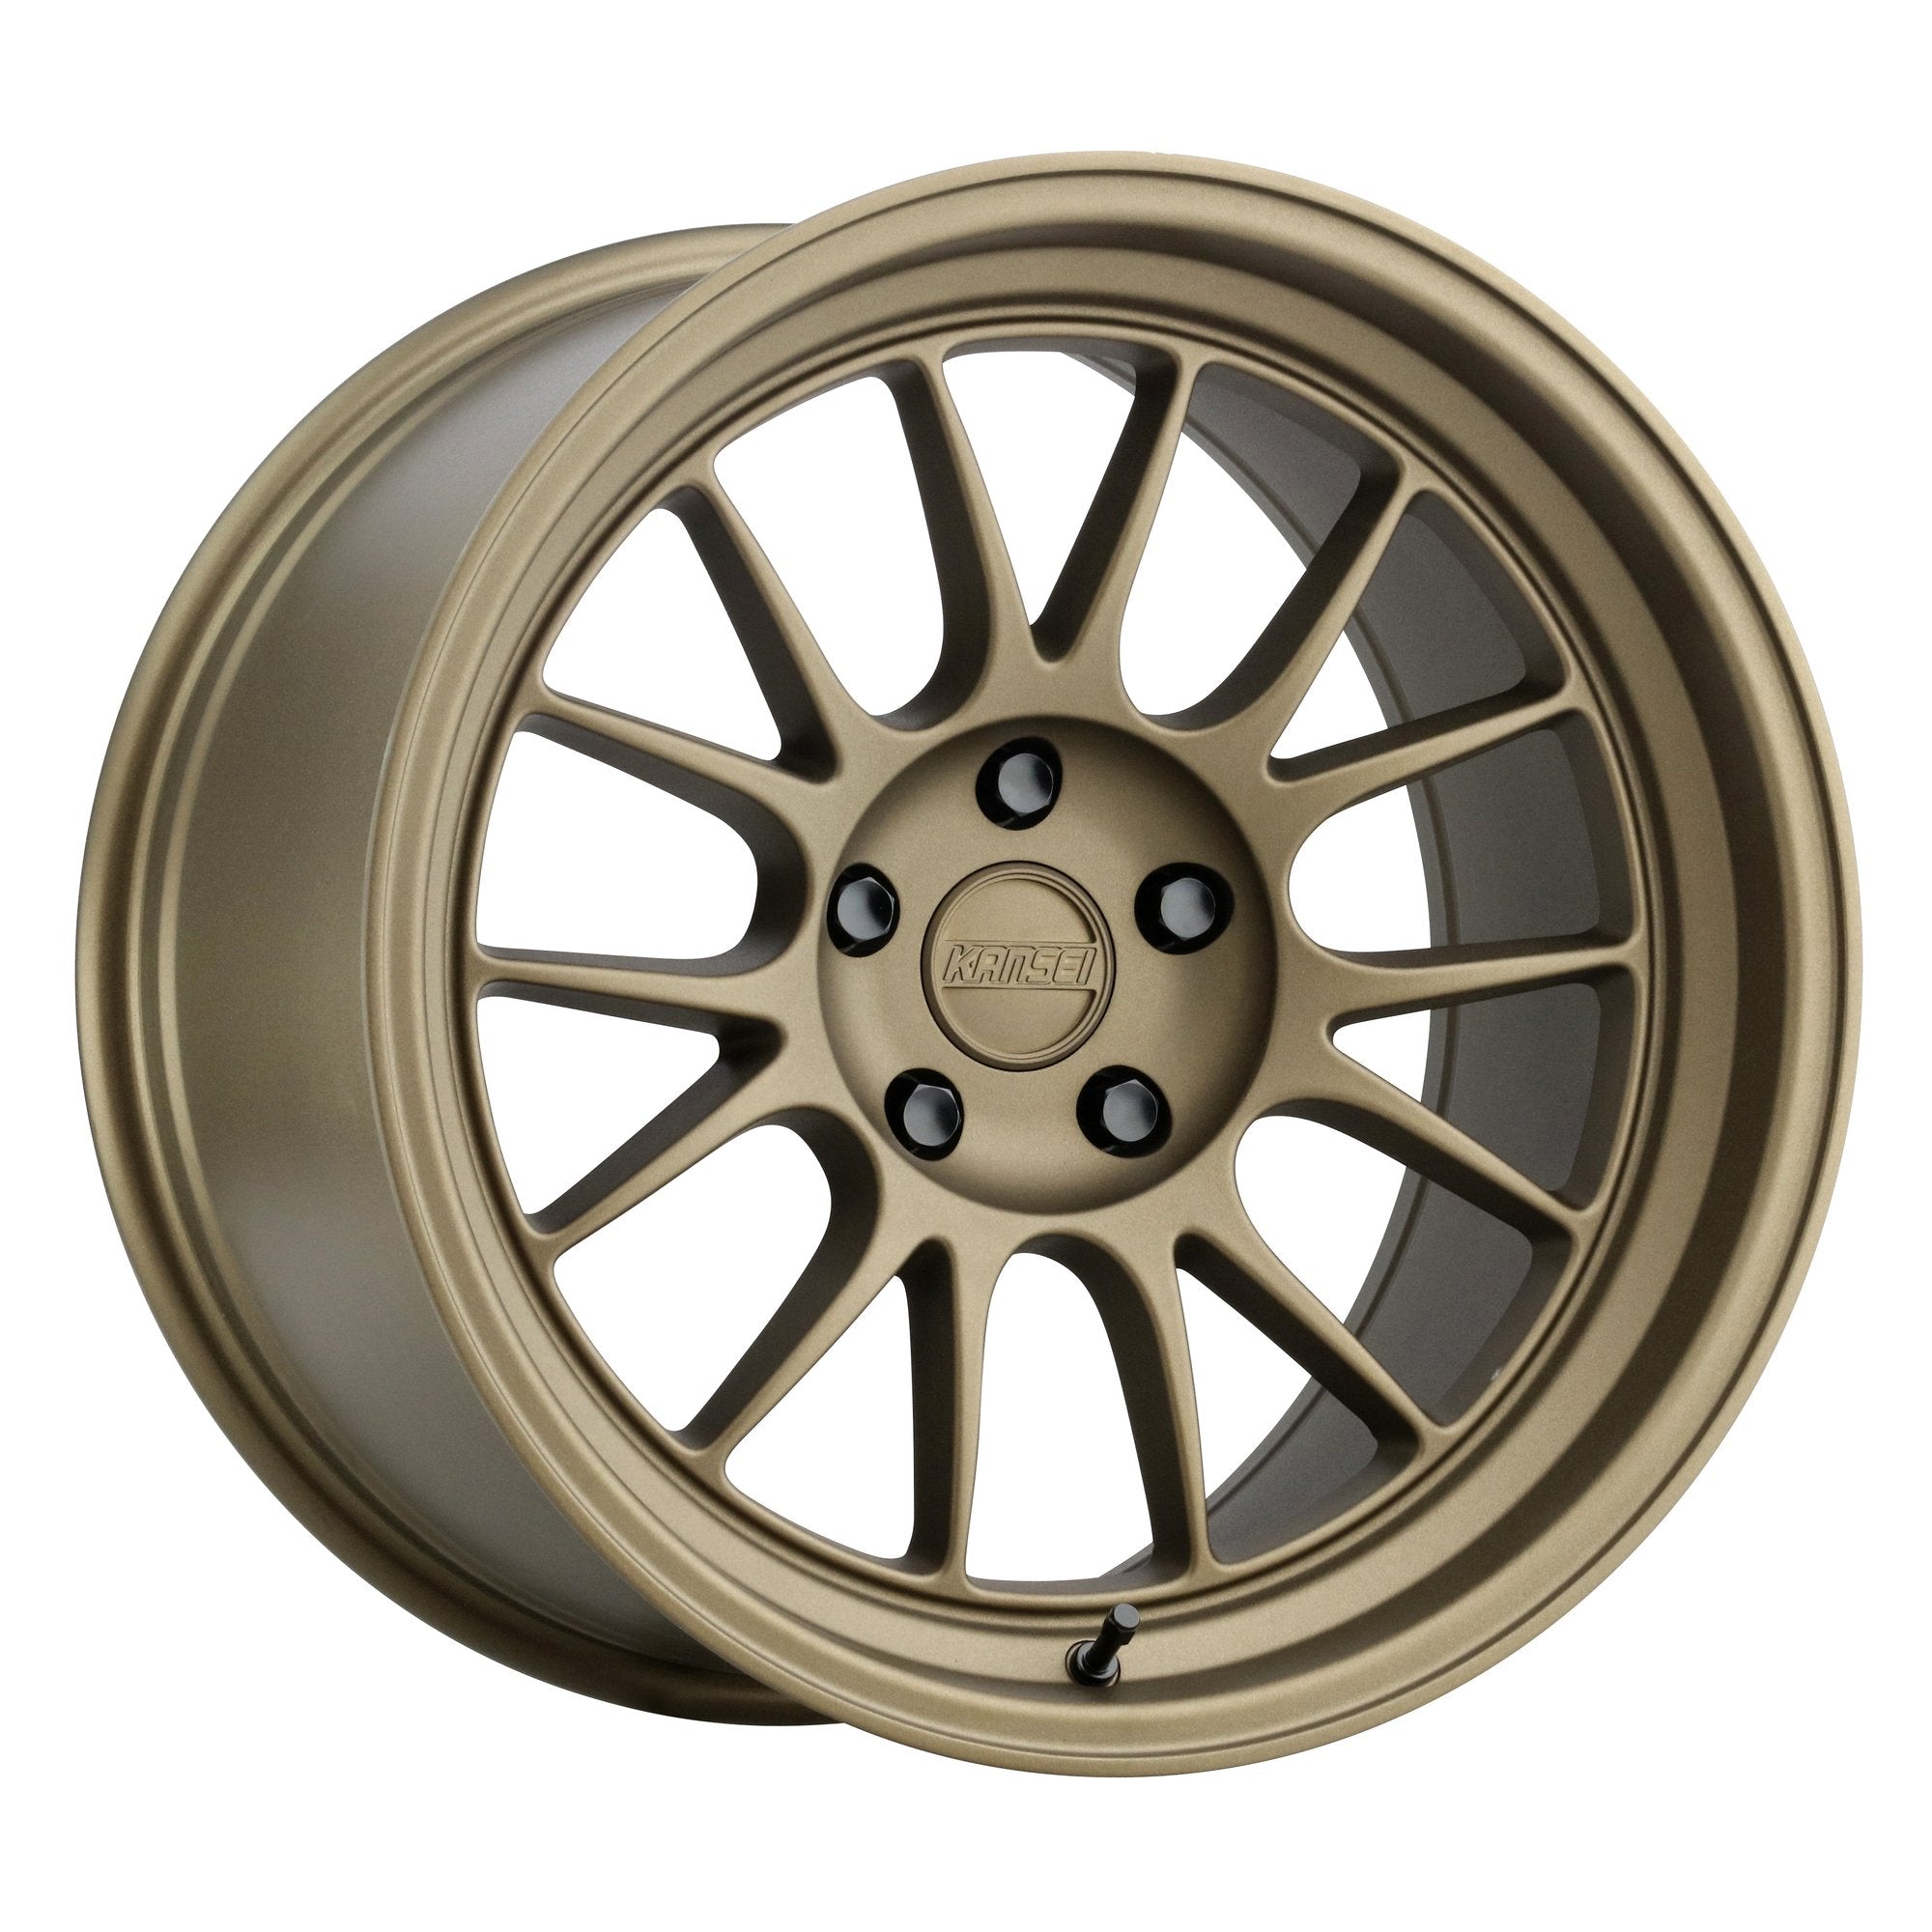 Kansei - Corsa Wheel - 18x10.5 +12mm - 5x114.3 - Textured Bronze - NextGen Tuning